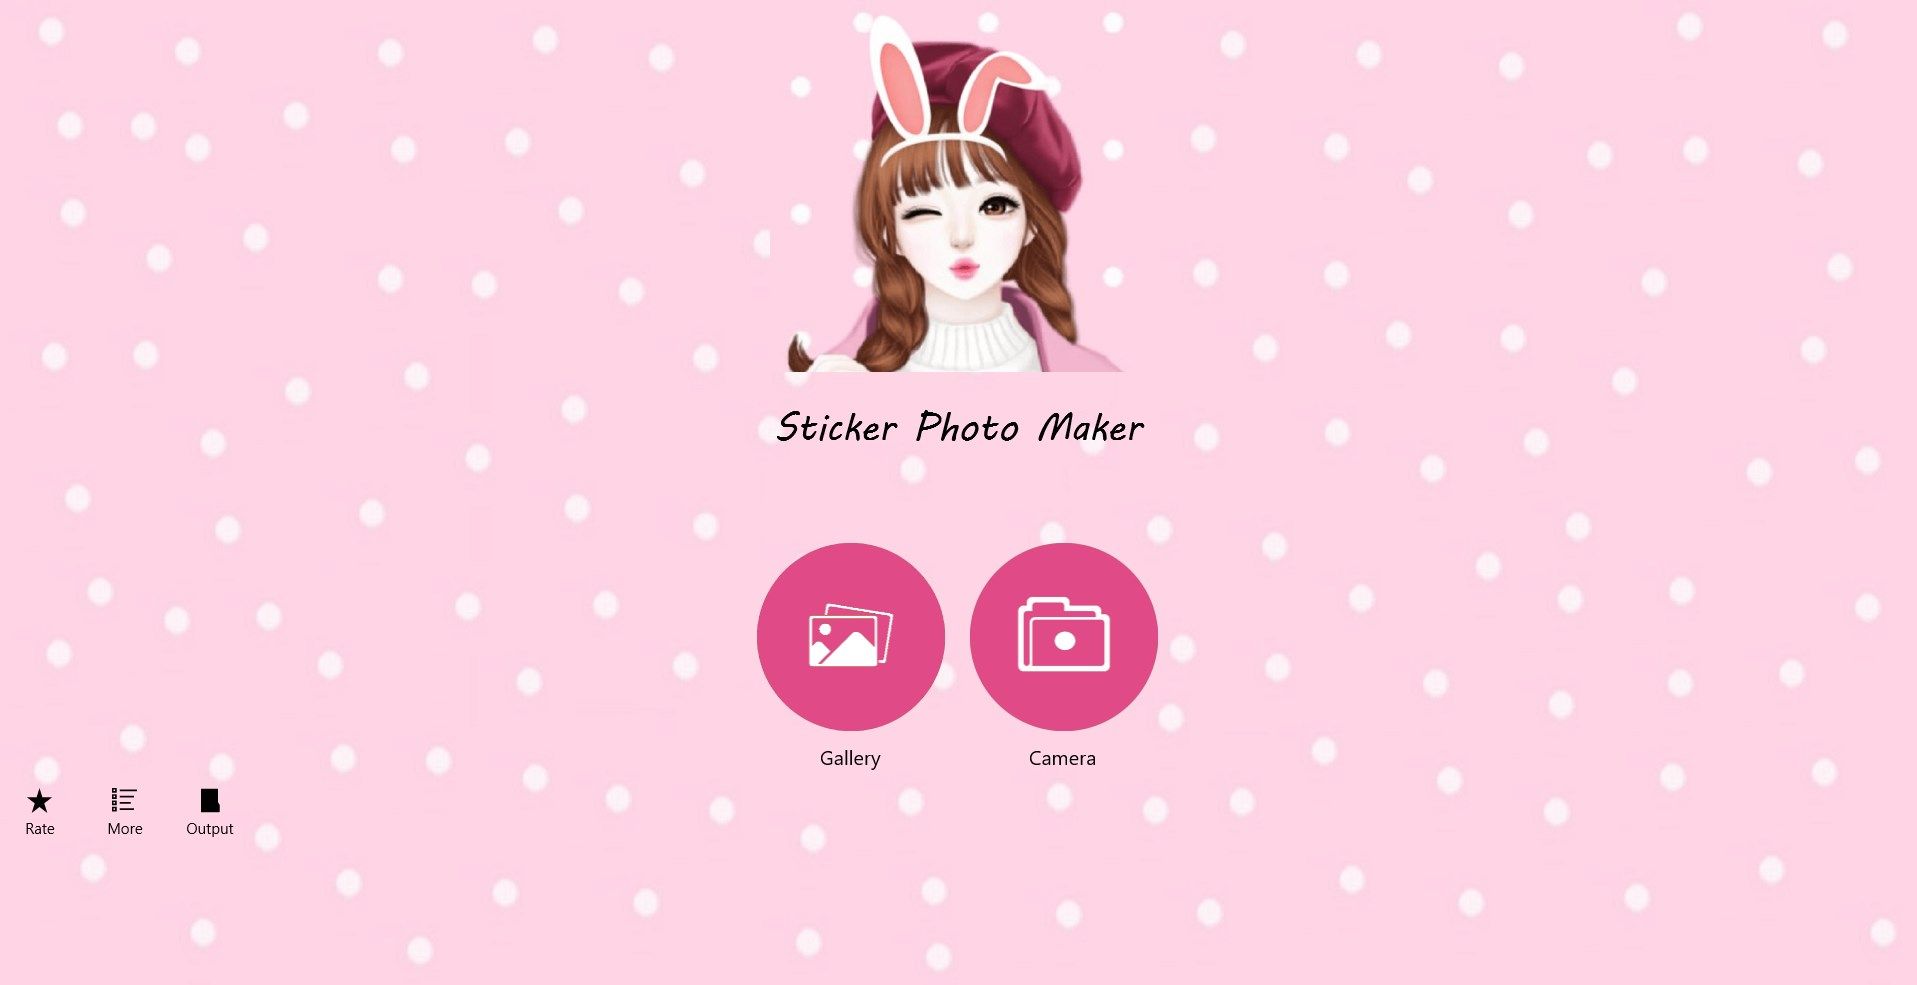 Sticker Photo Maker